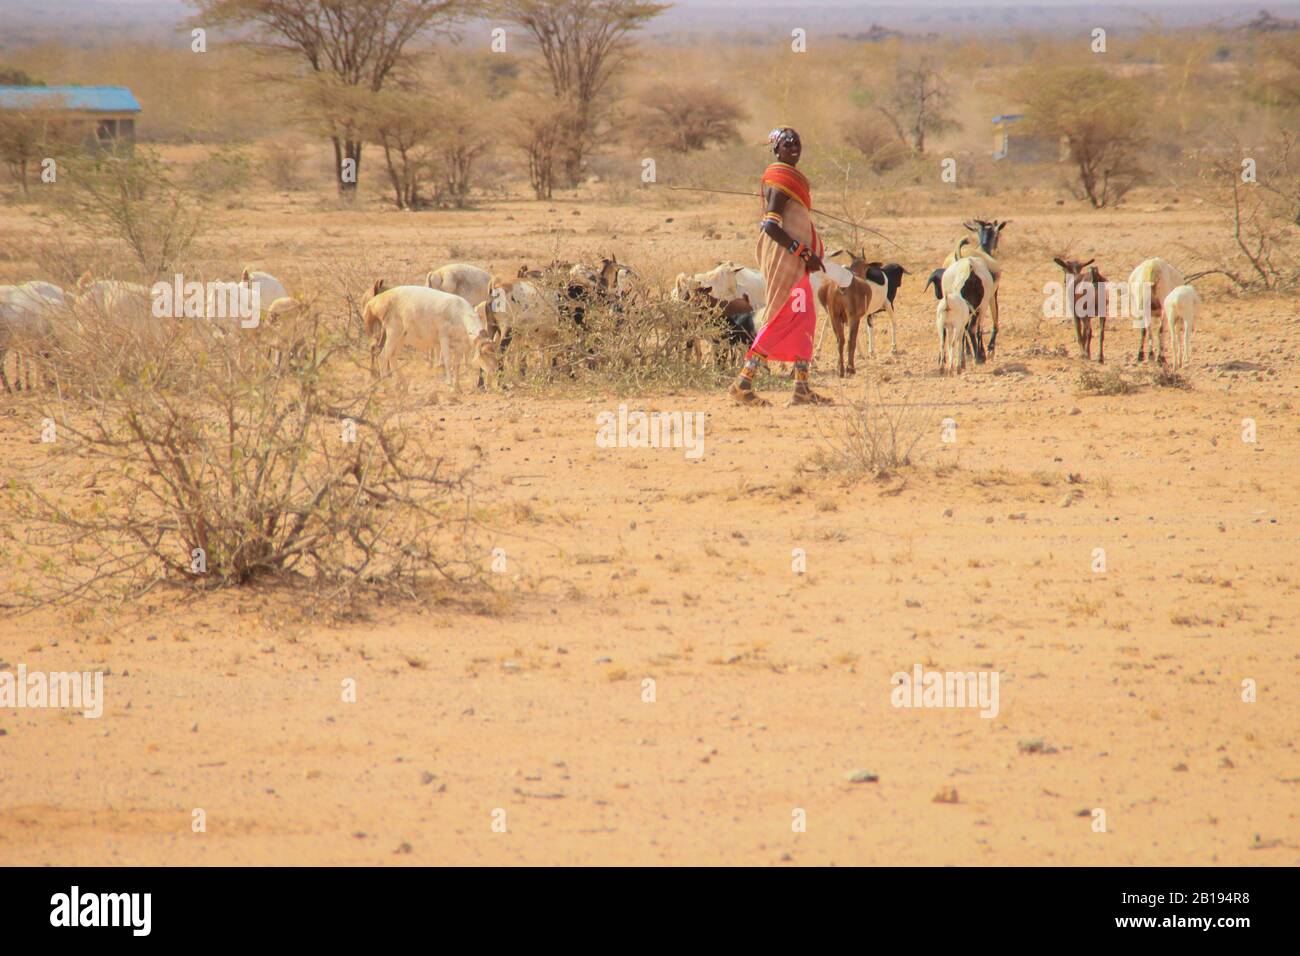 Marsabit, Kenya - January 16, 2015: African female shepherd from the Samburu tribe (a related Masai tribe) in a national costume herding a flock of go Stock Photo